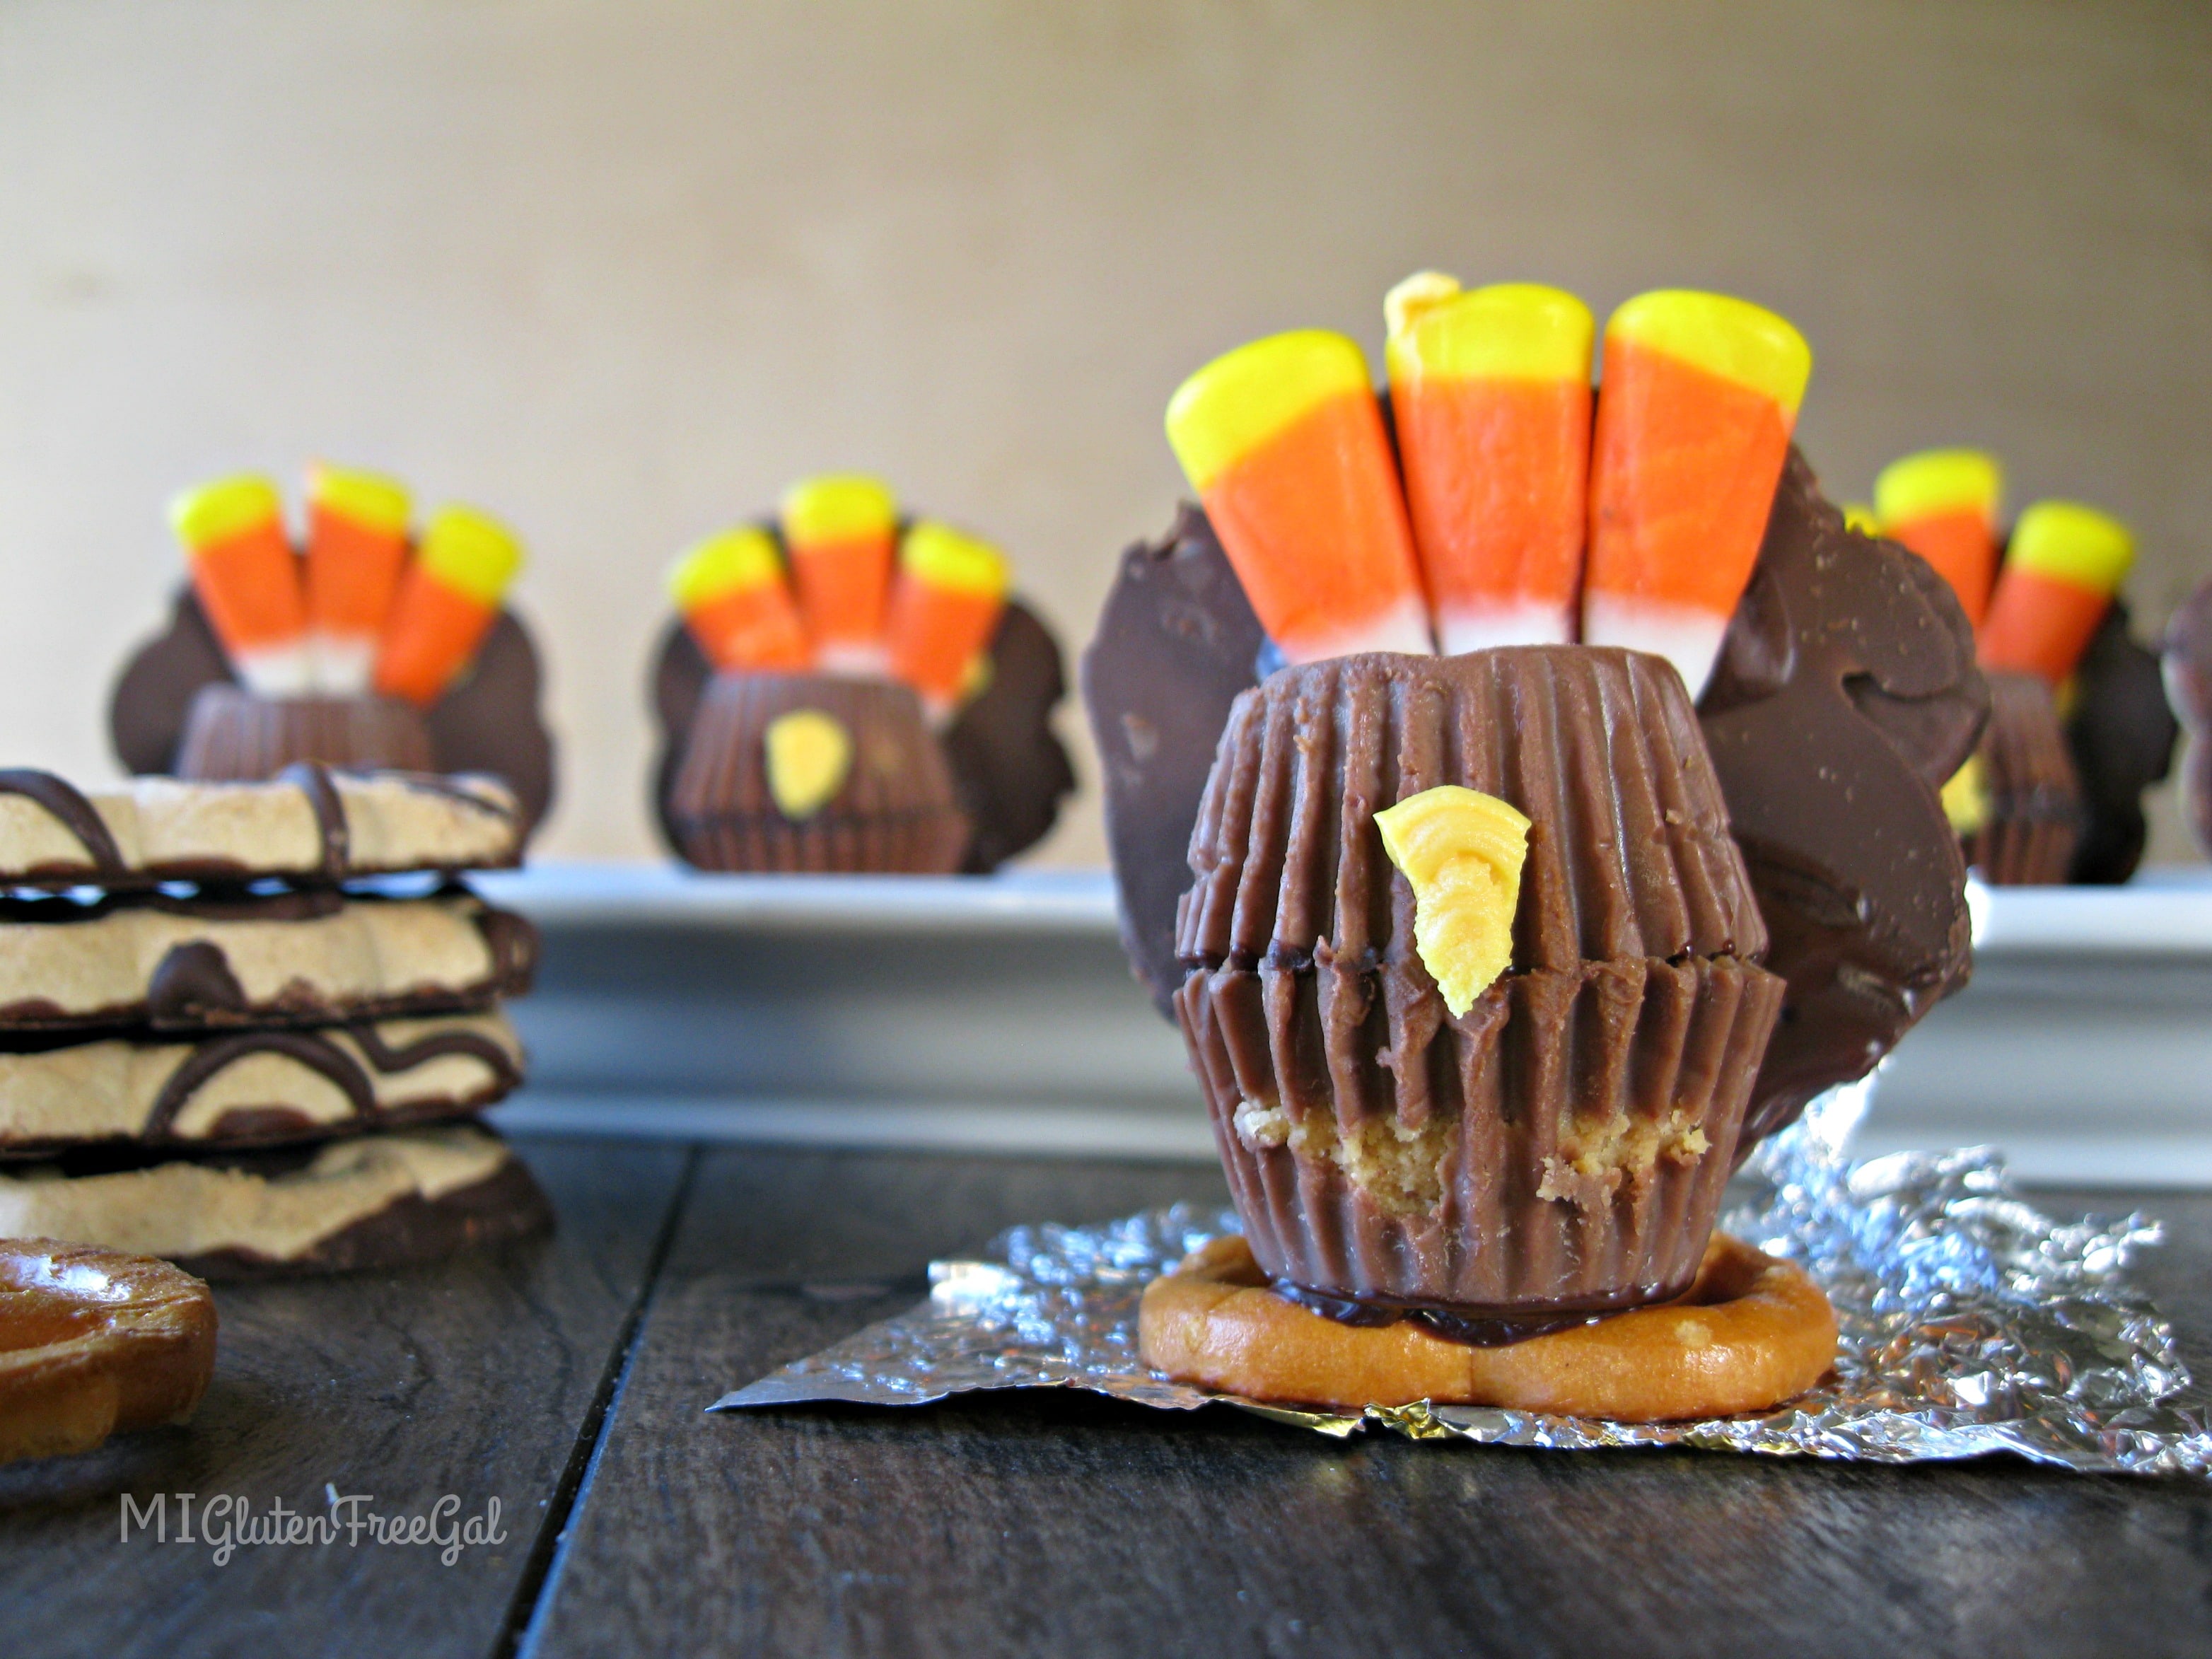 goodie girl fudge striped cookies make the MOST adorable edible gluten-free Thanksgiving turkeys!